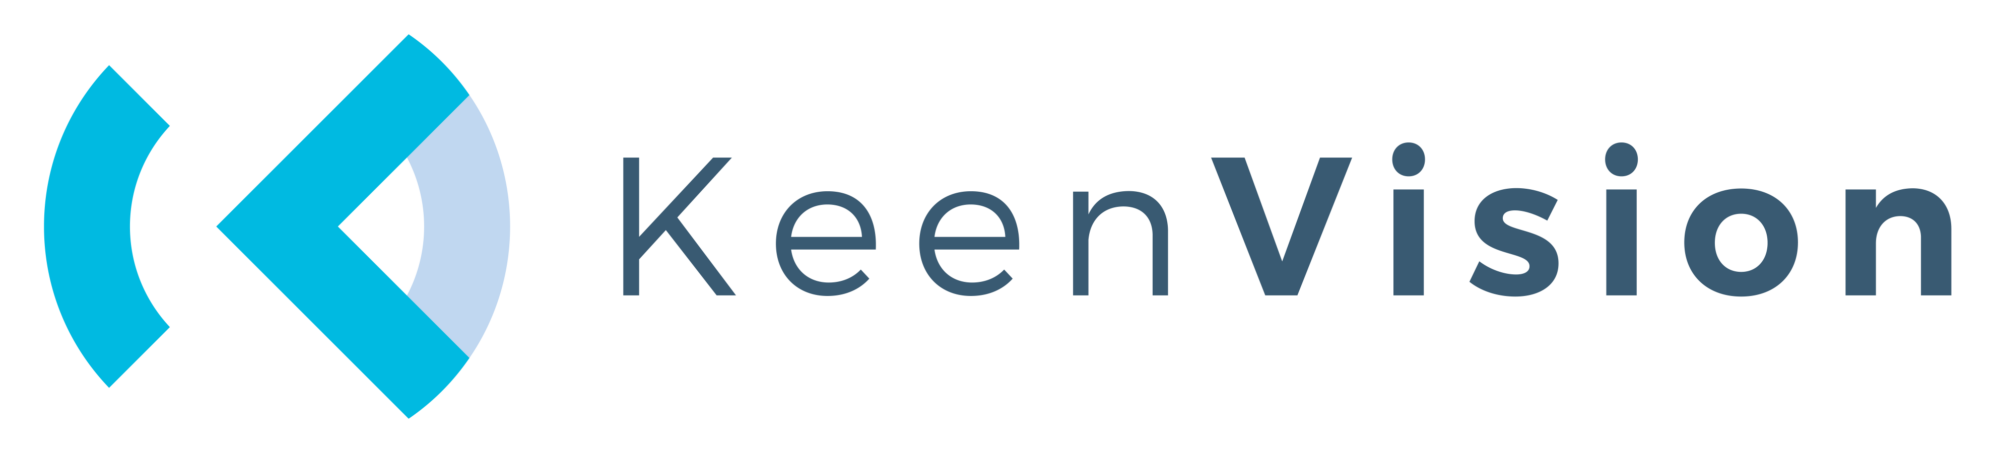 Keen vision Logo